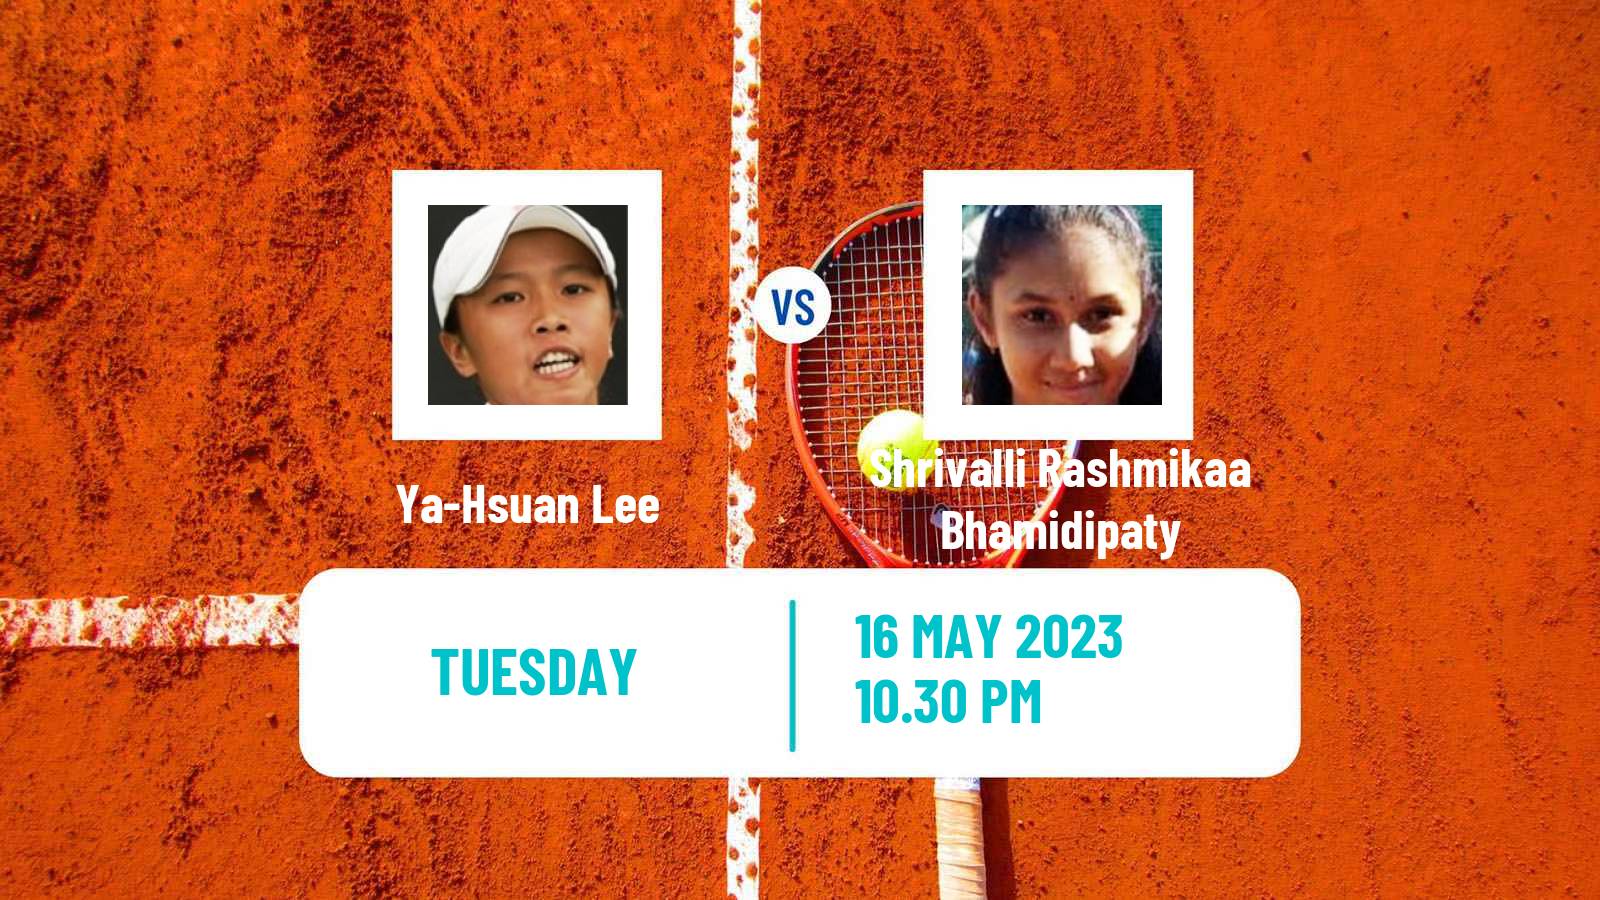 Tennis ITF W25 Incheon Women Ya-Hsuan Lee - Shrivalli Rashmikaa Bhamidipaty